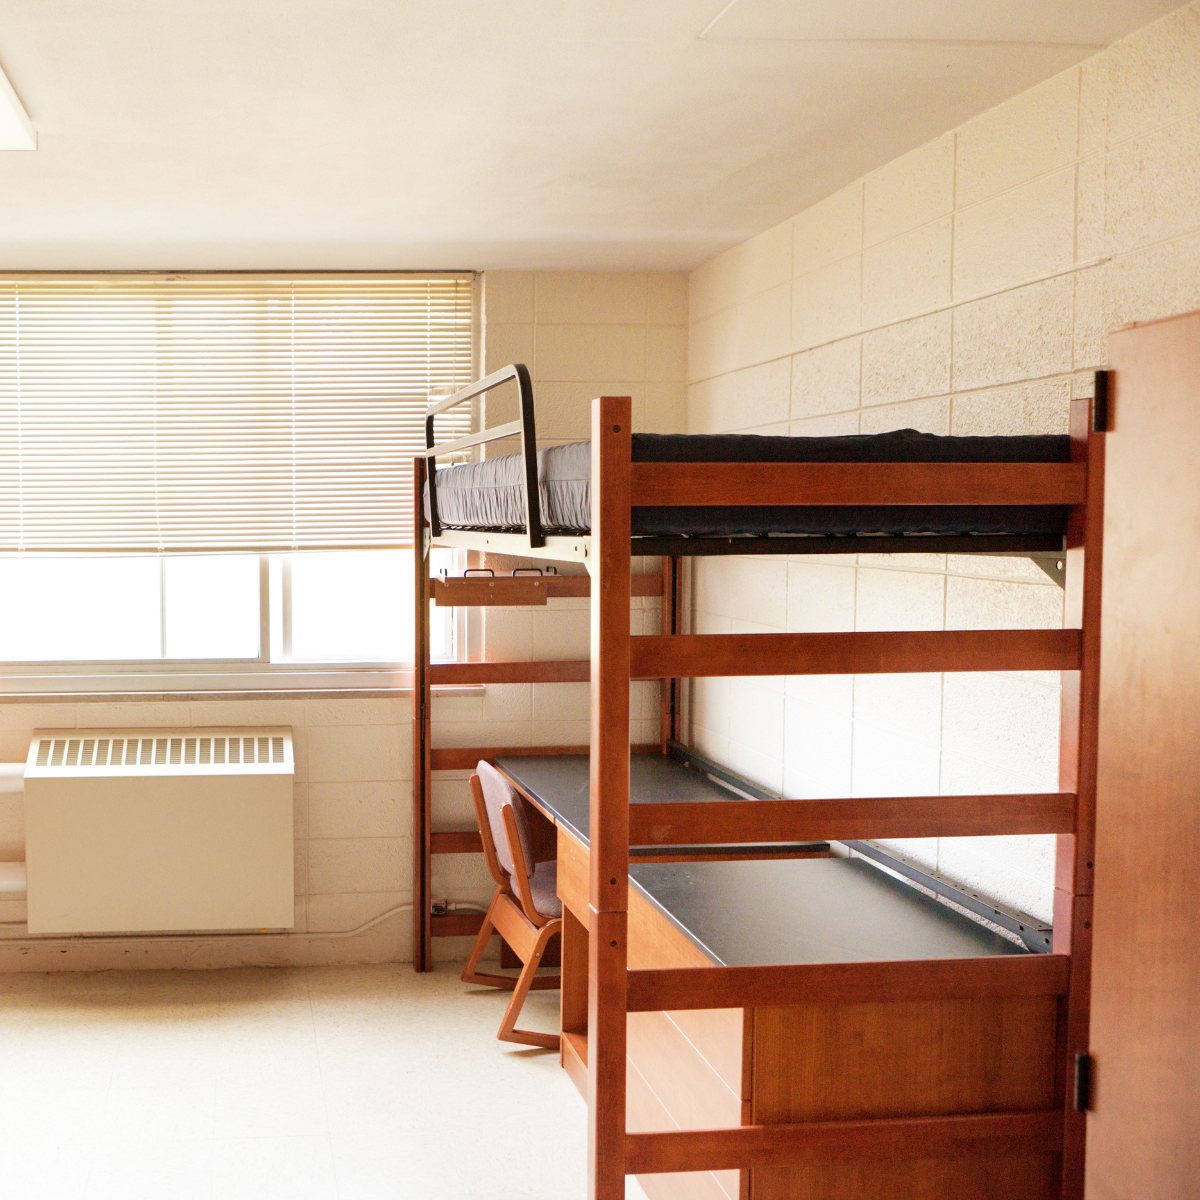 Case Study: University Dormitory Services